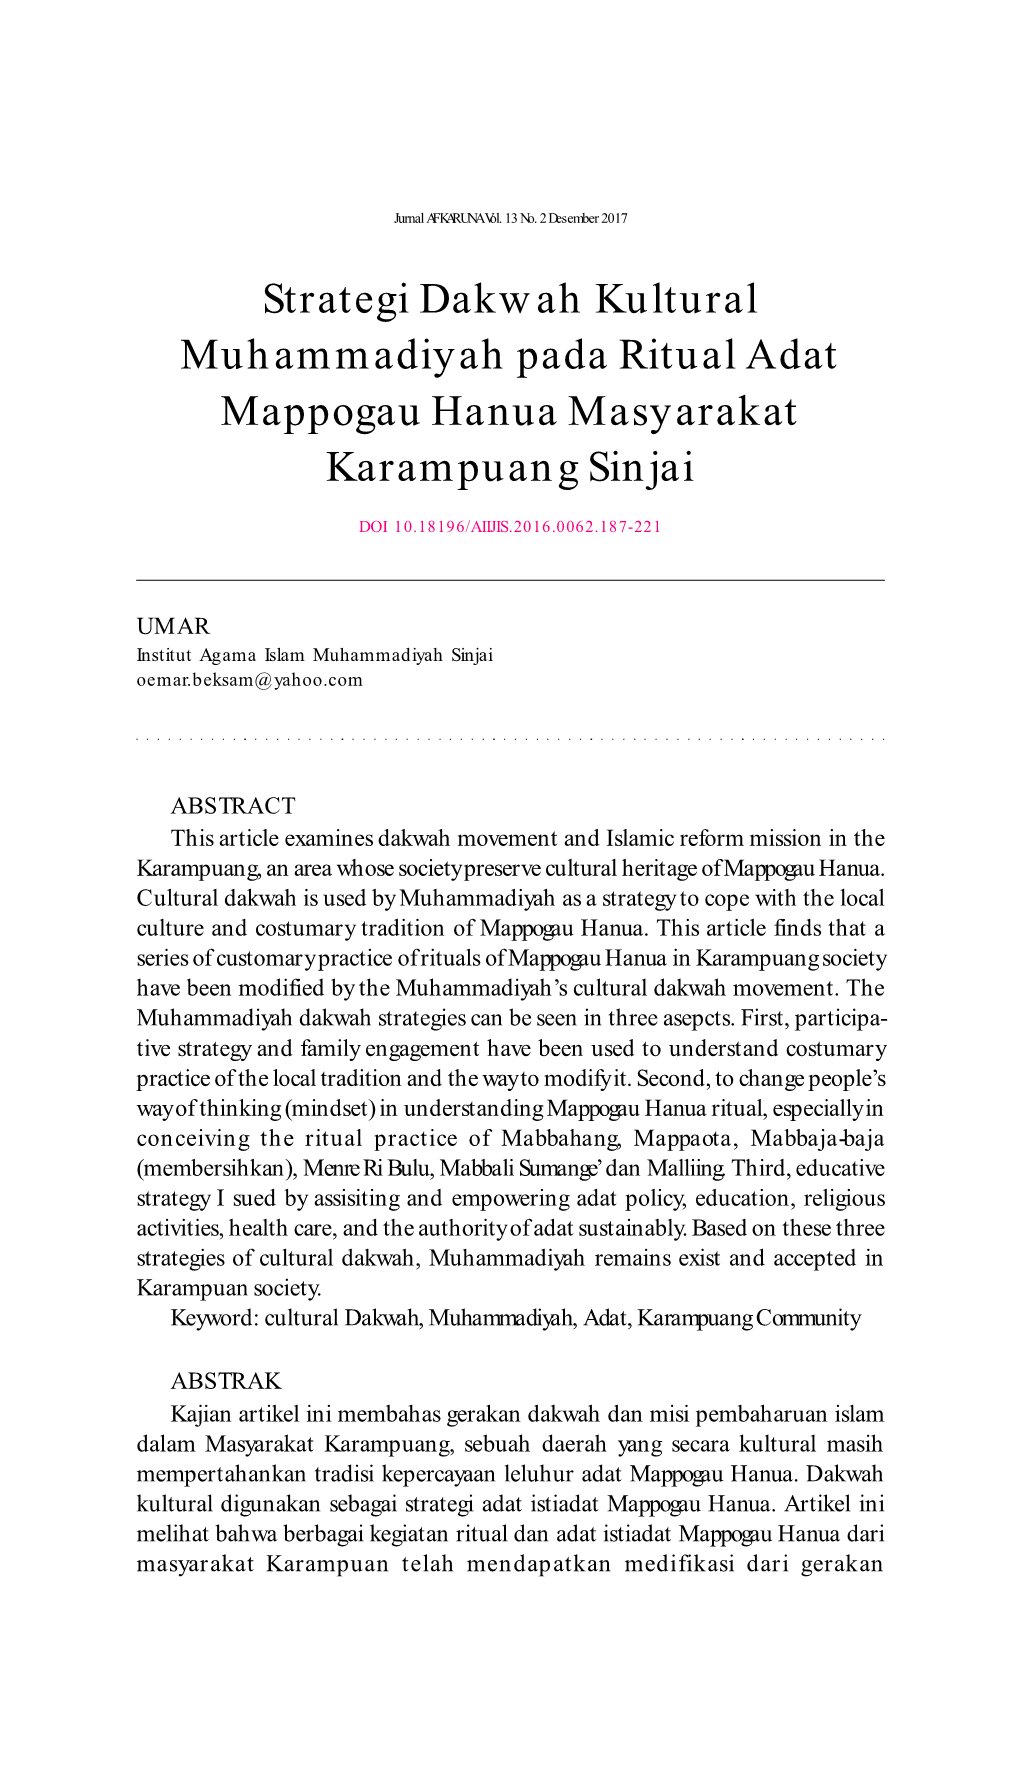 Strategi Dakwah Kultural Muhammadiyah Pada Ritual Adat Mappogau Hanua Masyarakat Karampuang Sinjai